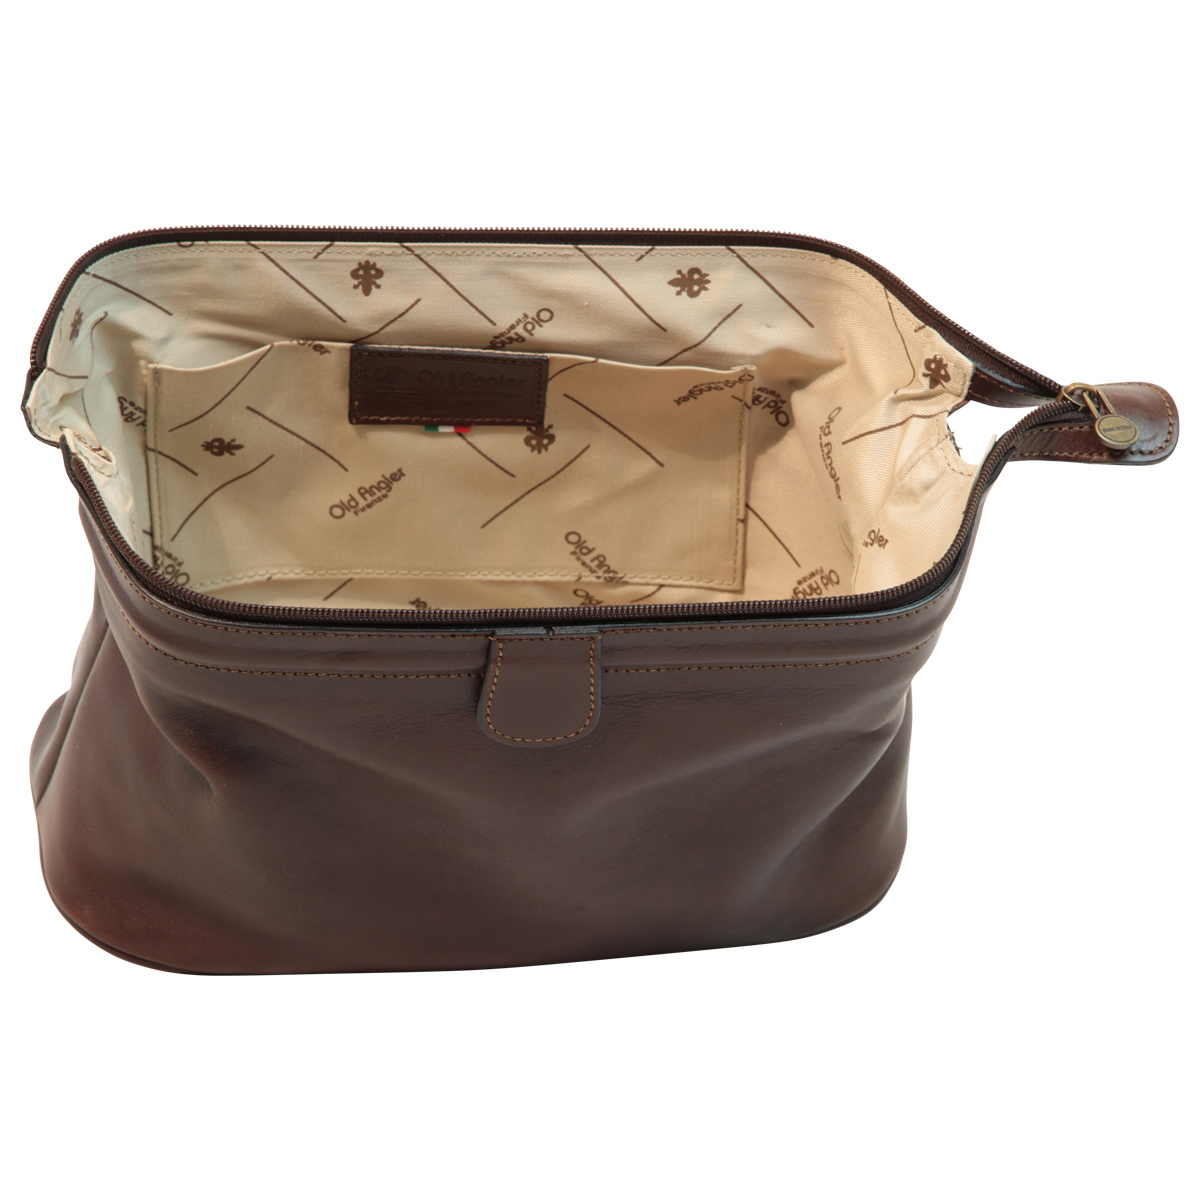 Leather Beauty Case - Dark Brown | 065489TM UK | Old Angler Firenze